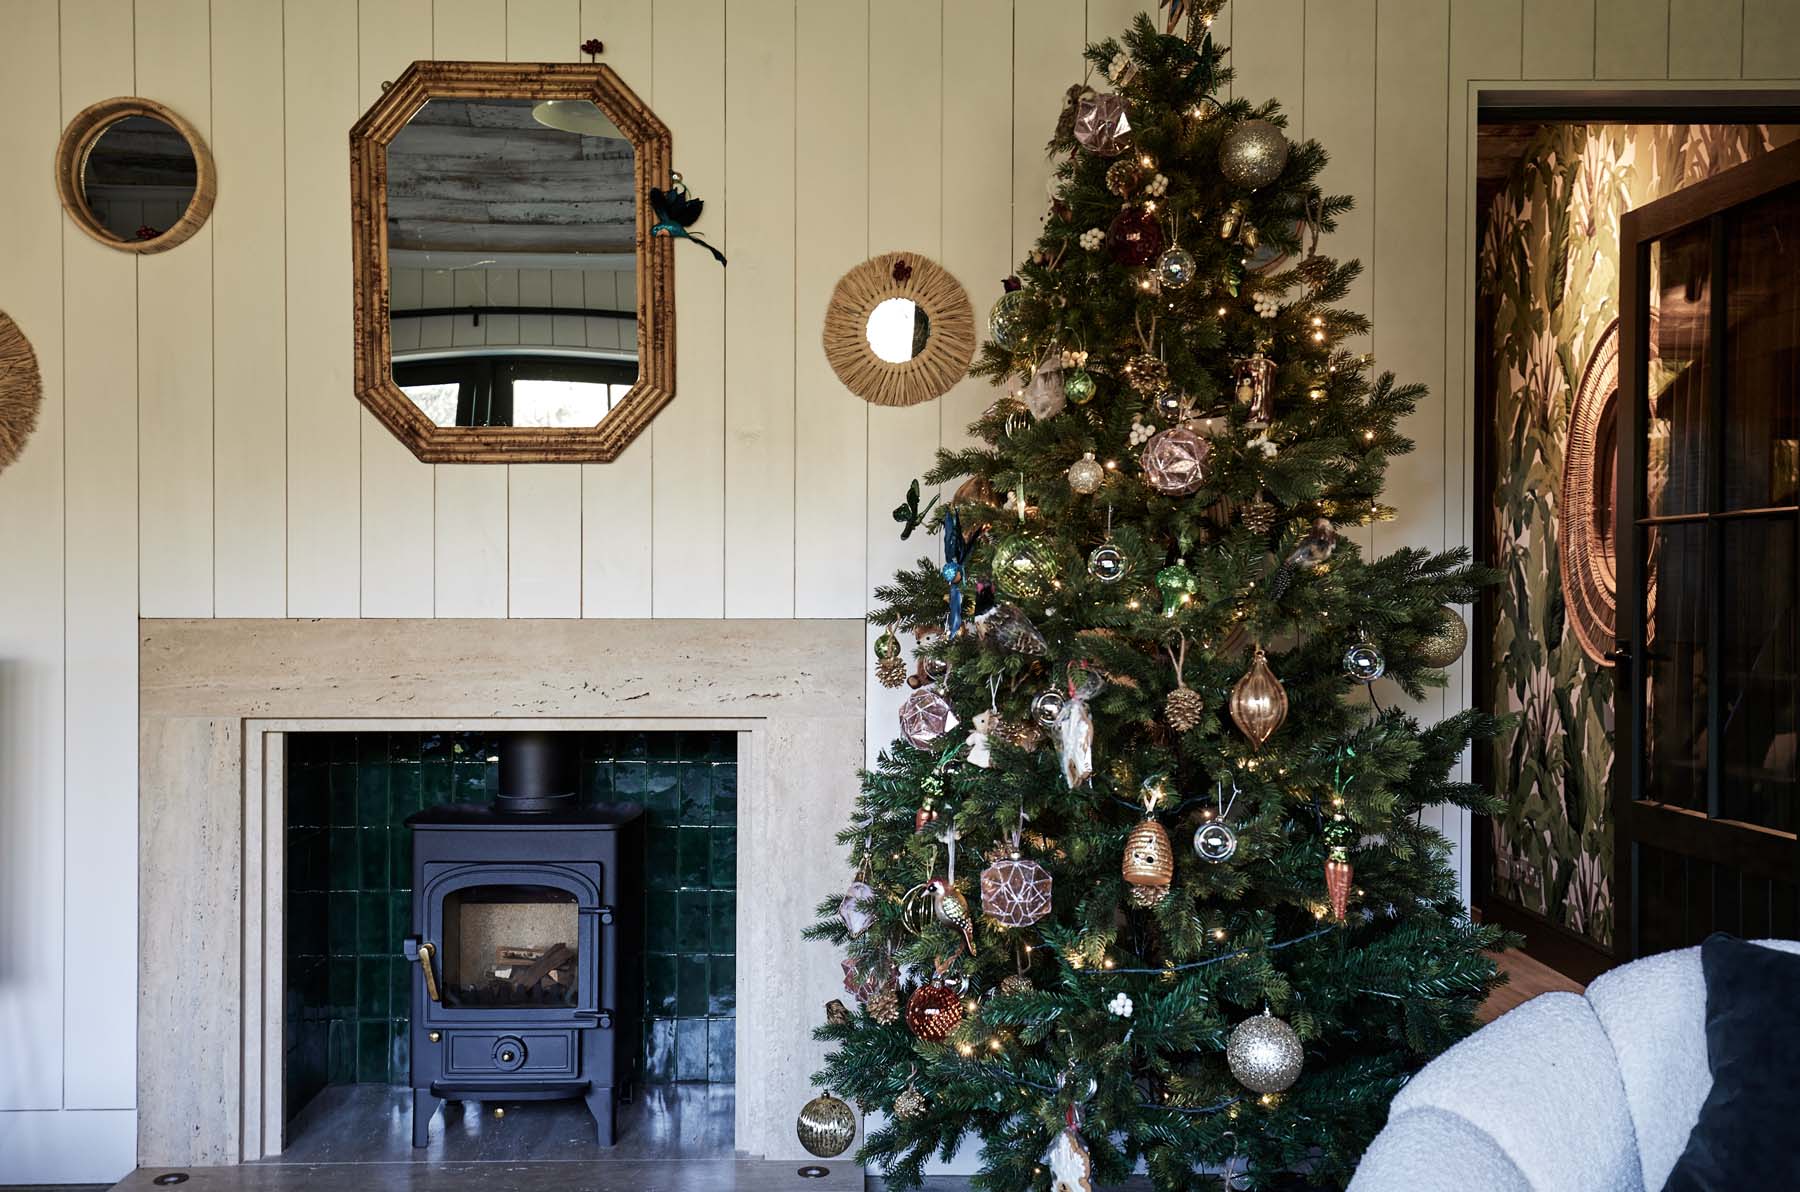 Log burner with overhead mirror and Christmas tree